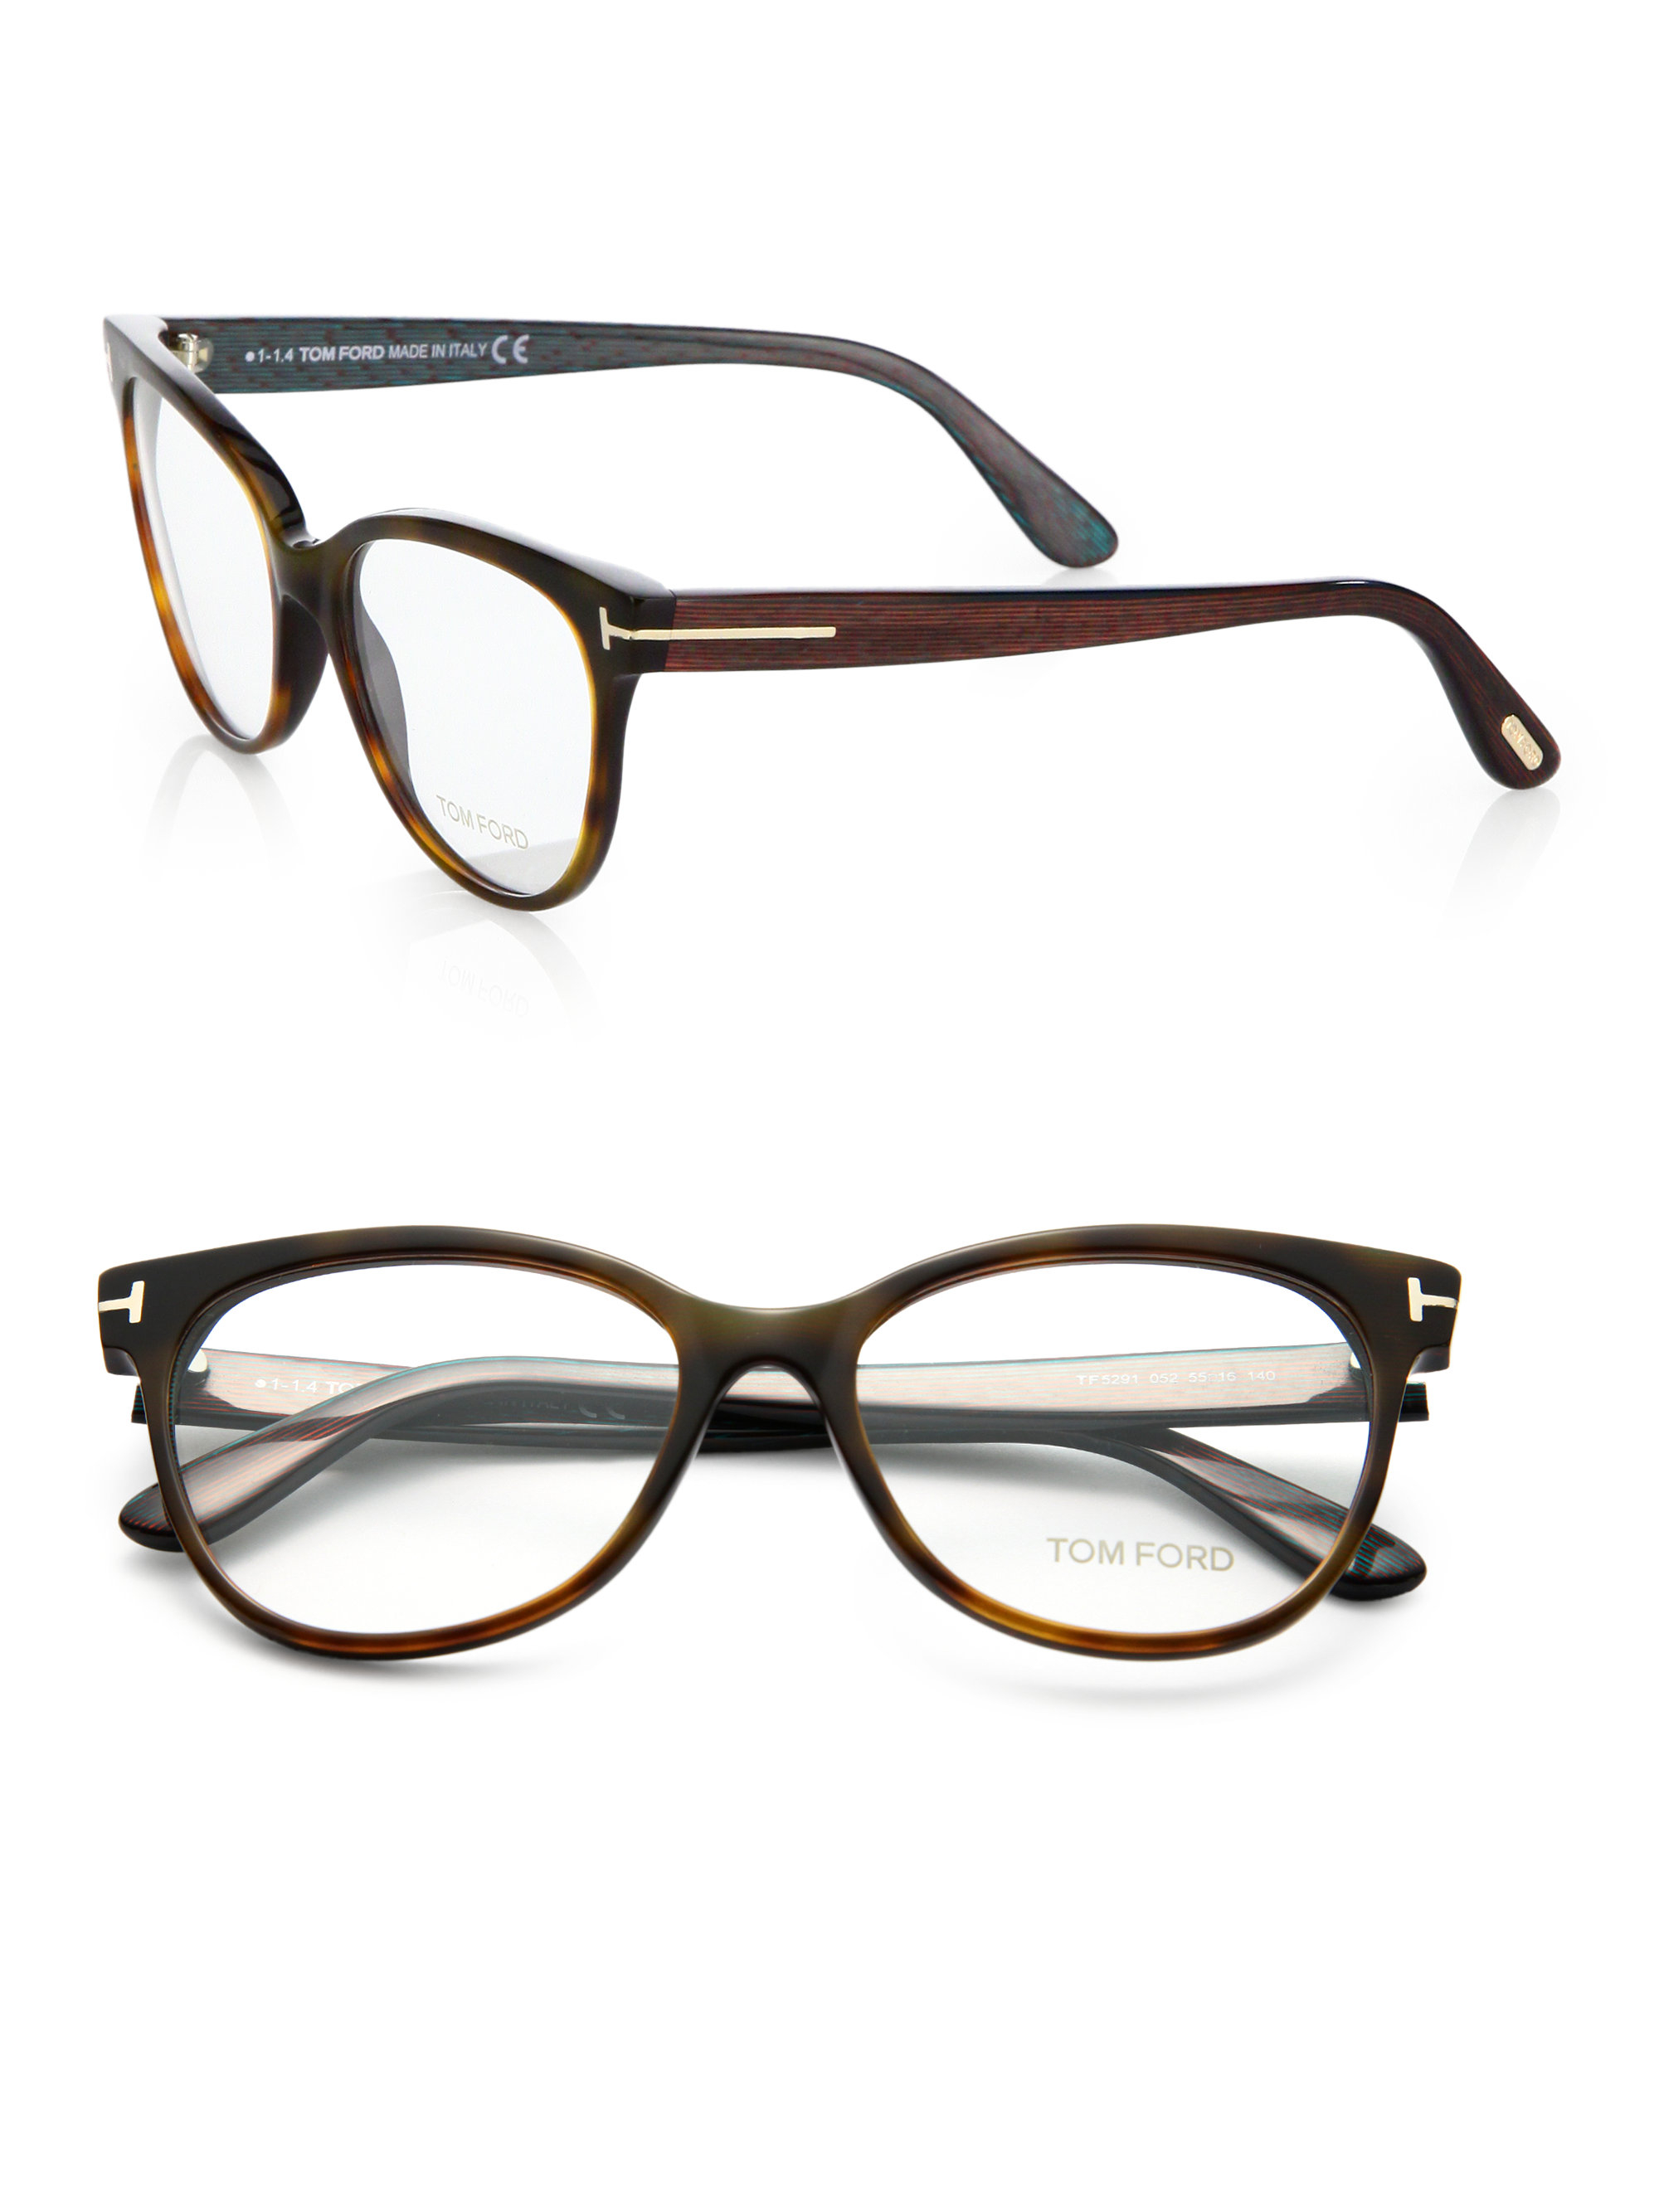 Lyst - Tom Ford Cat's-eye Optical Glasses in Brown